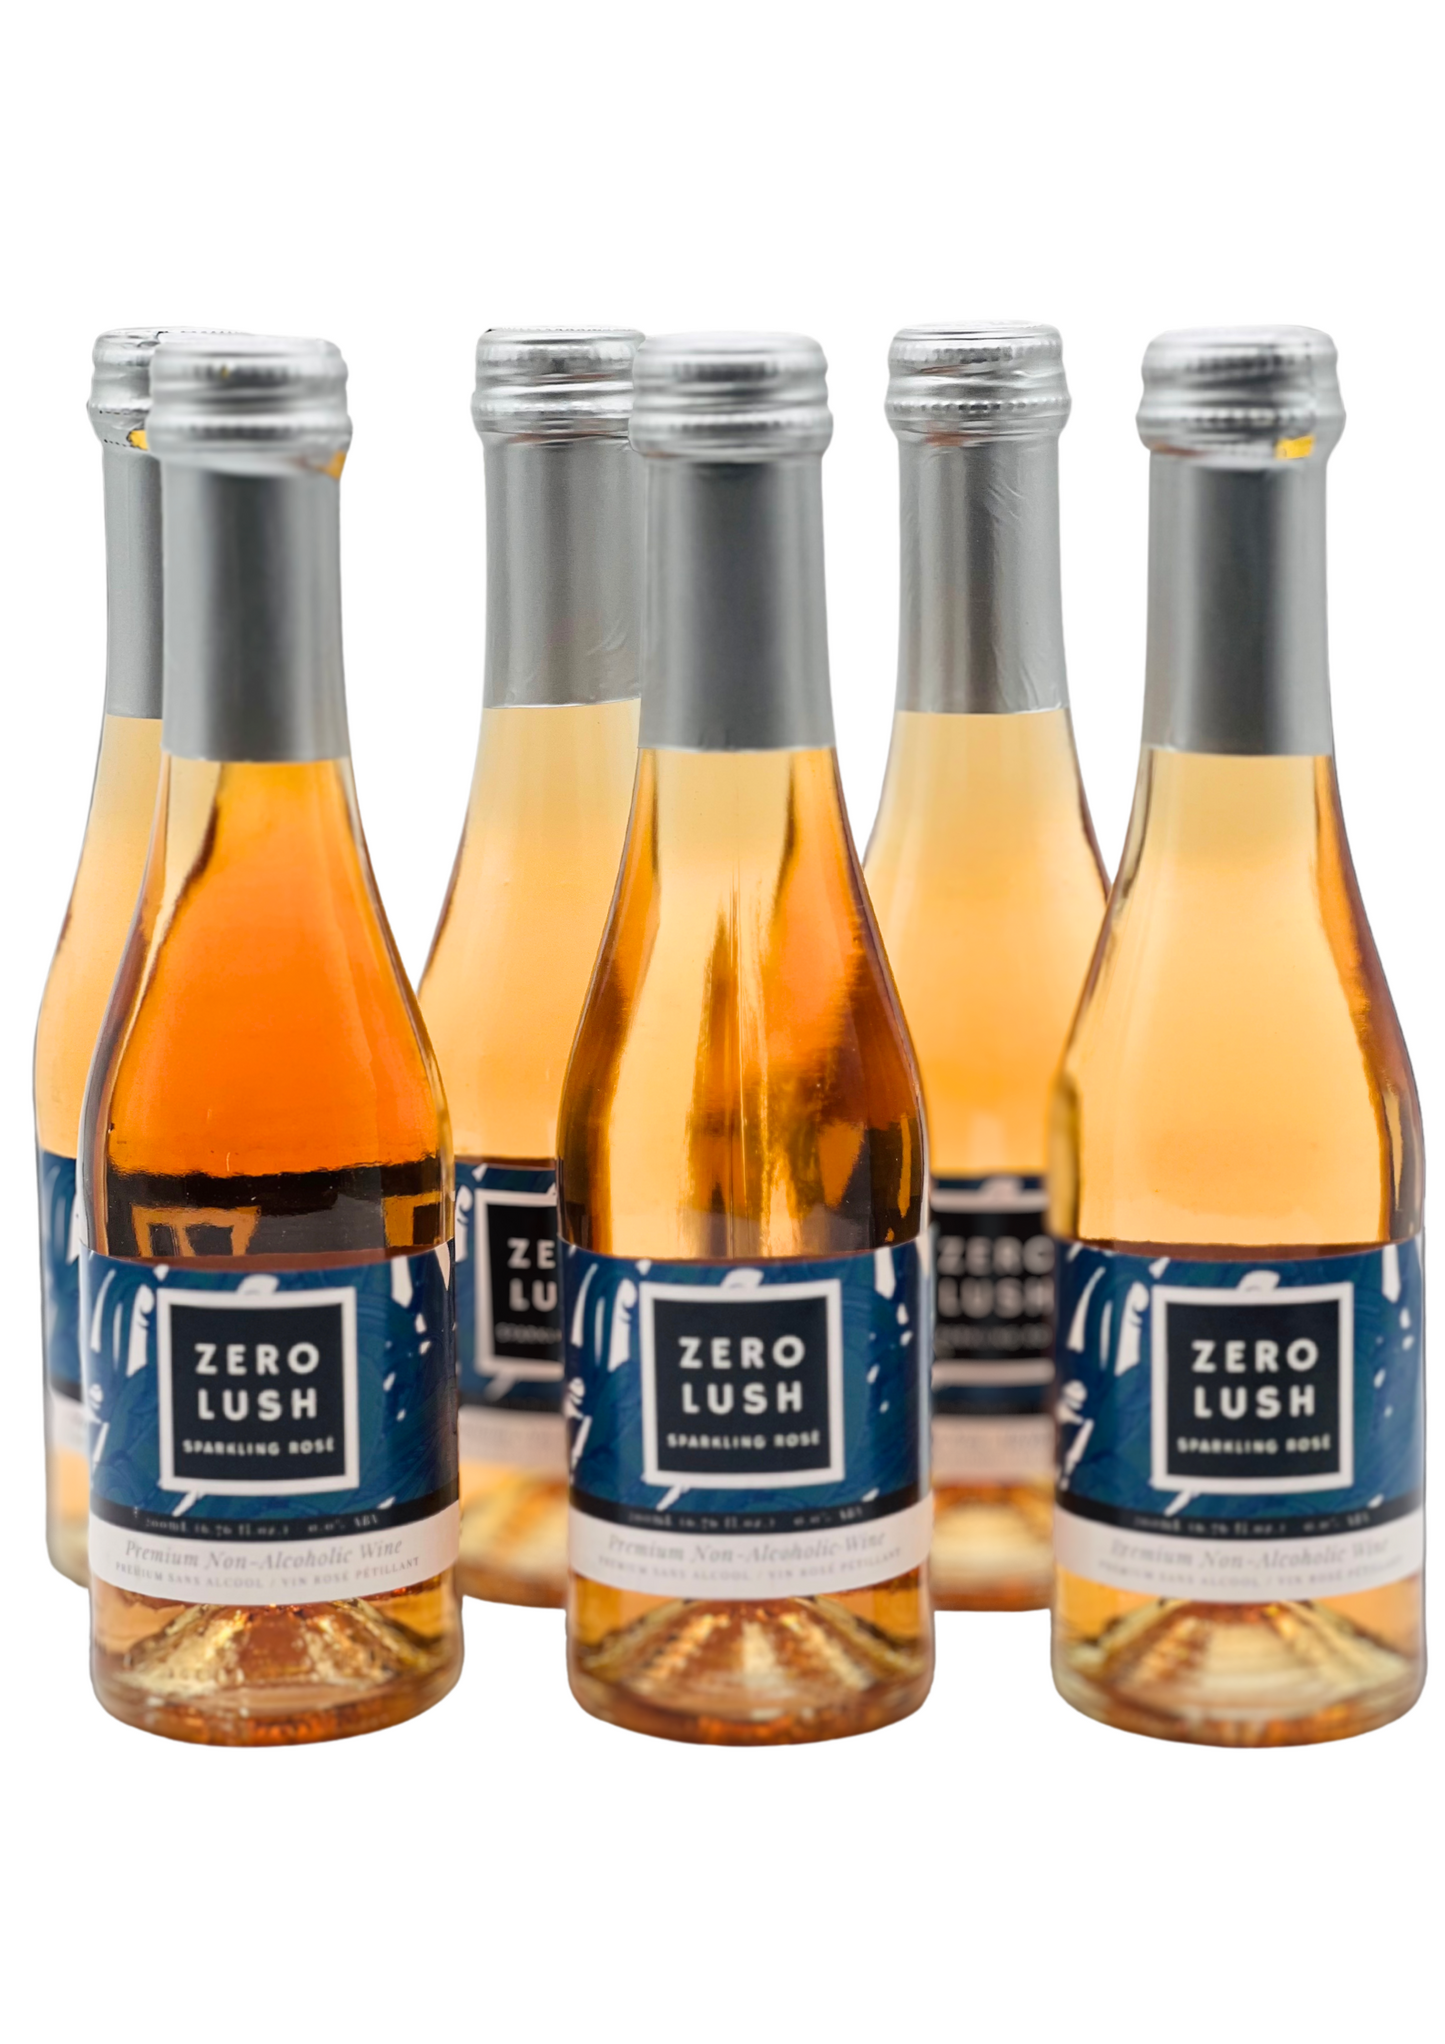 Zero Lush Sparkling Rosé (200ml) - 6 pack